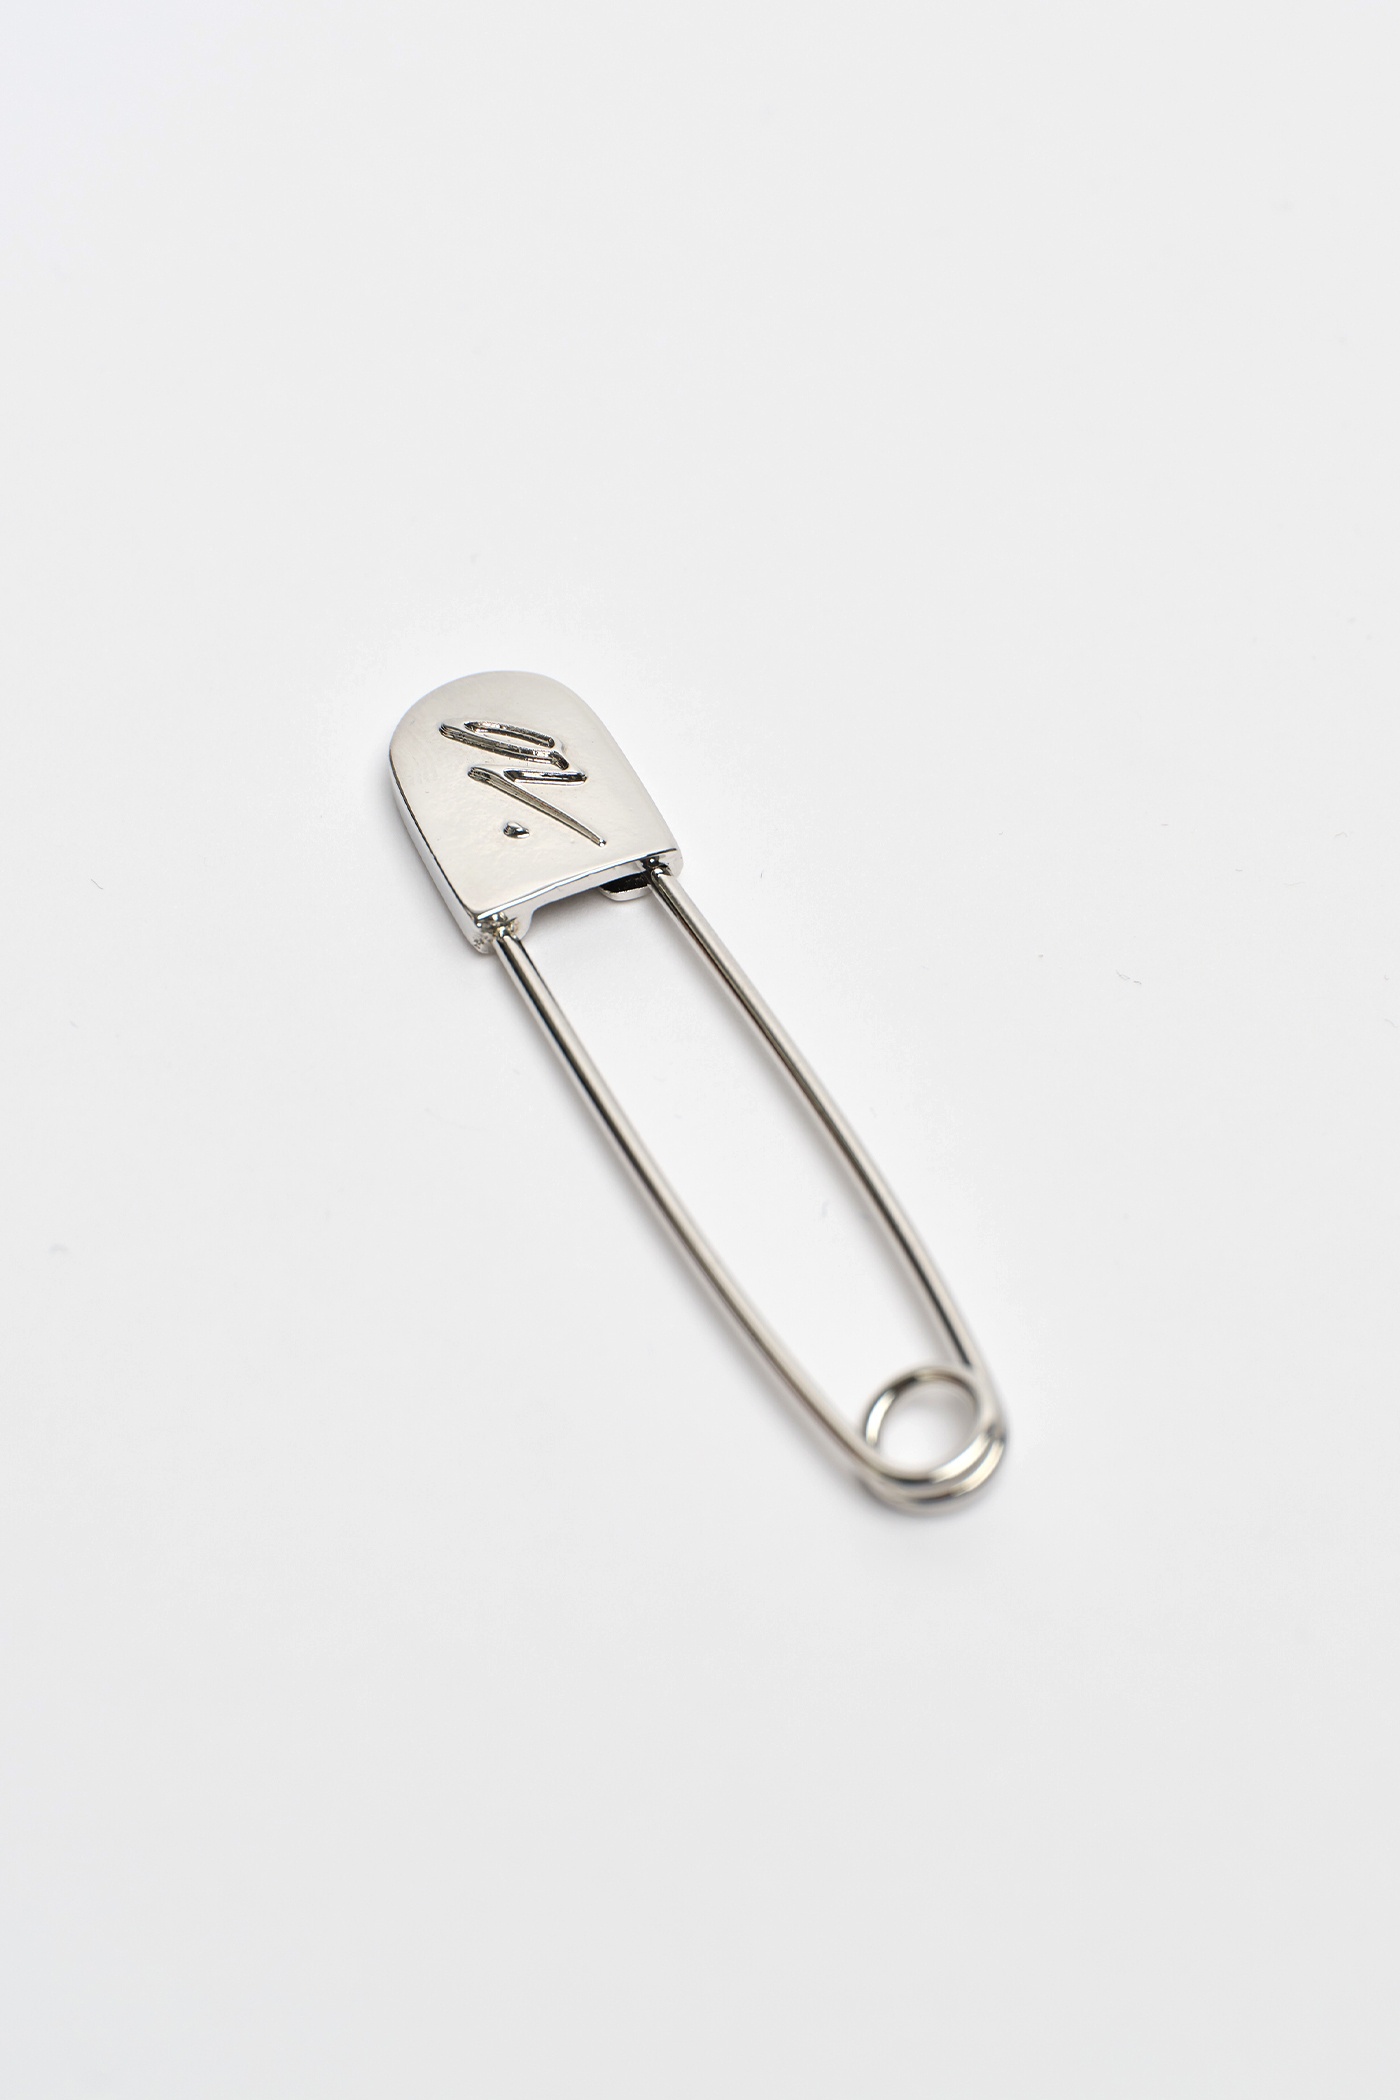 Safety Pin Big Silver Nickel - 1